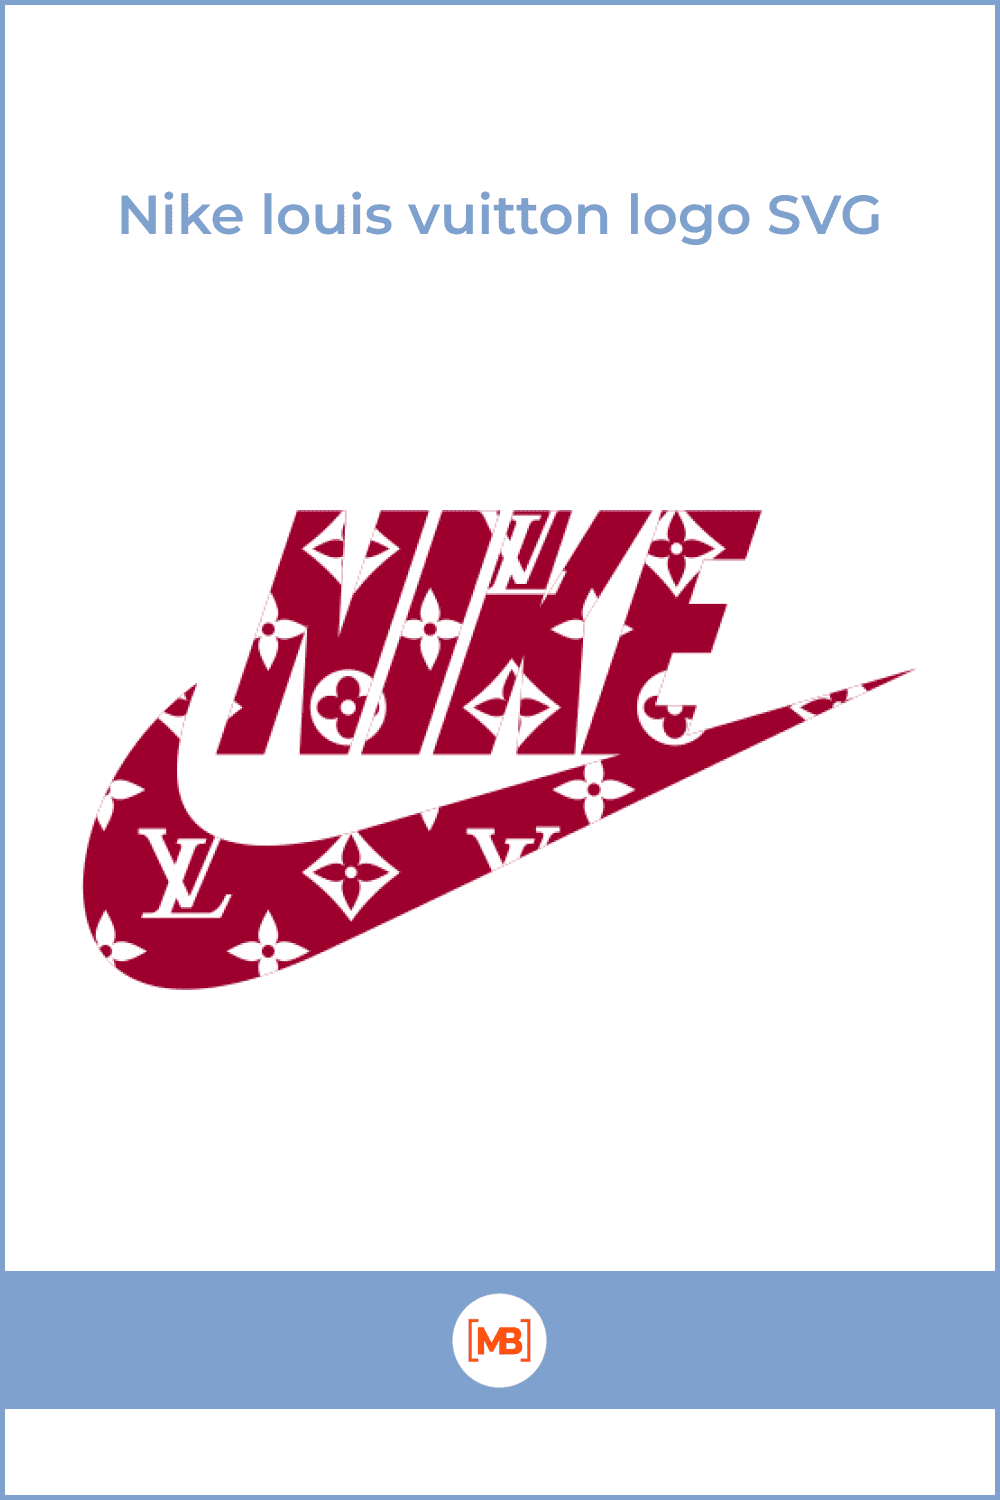 Nike louis vuitton logo SVG.